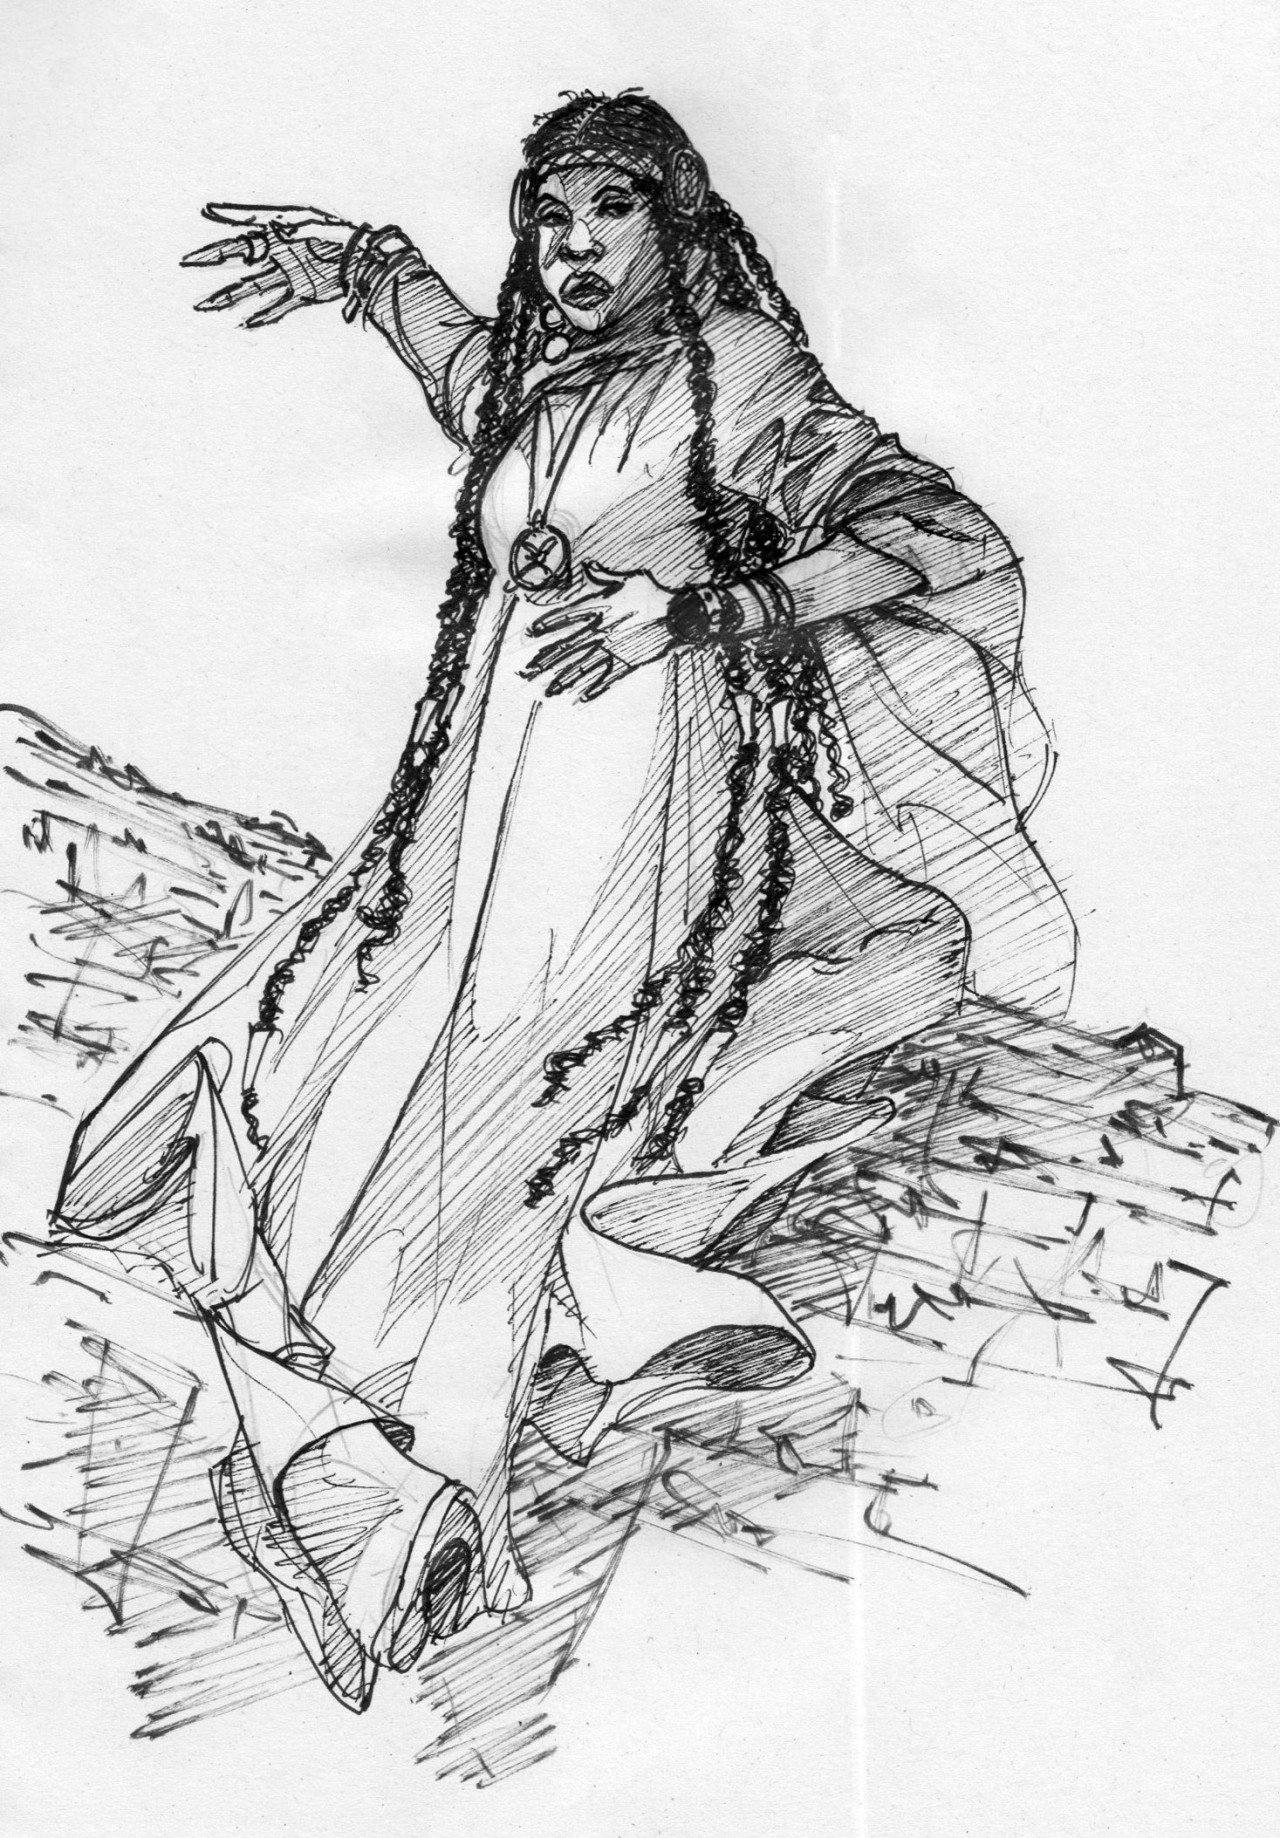 #dessin#croquis#bande dessinée #noir et blanc #sketch#drawing#comics #black and white #woman#femme#Magicienne#magician#costume #artists on tumblr